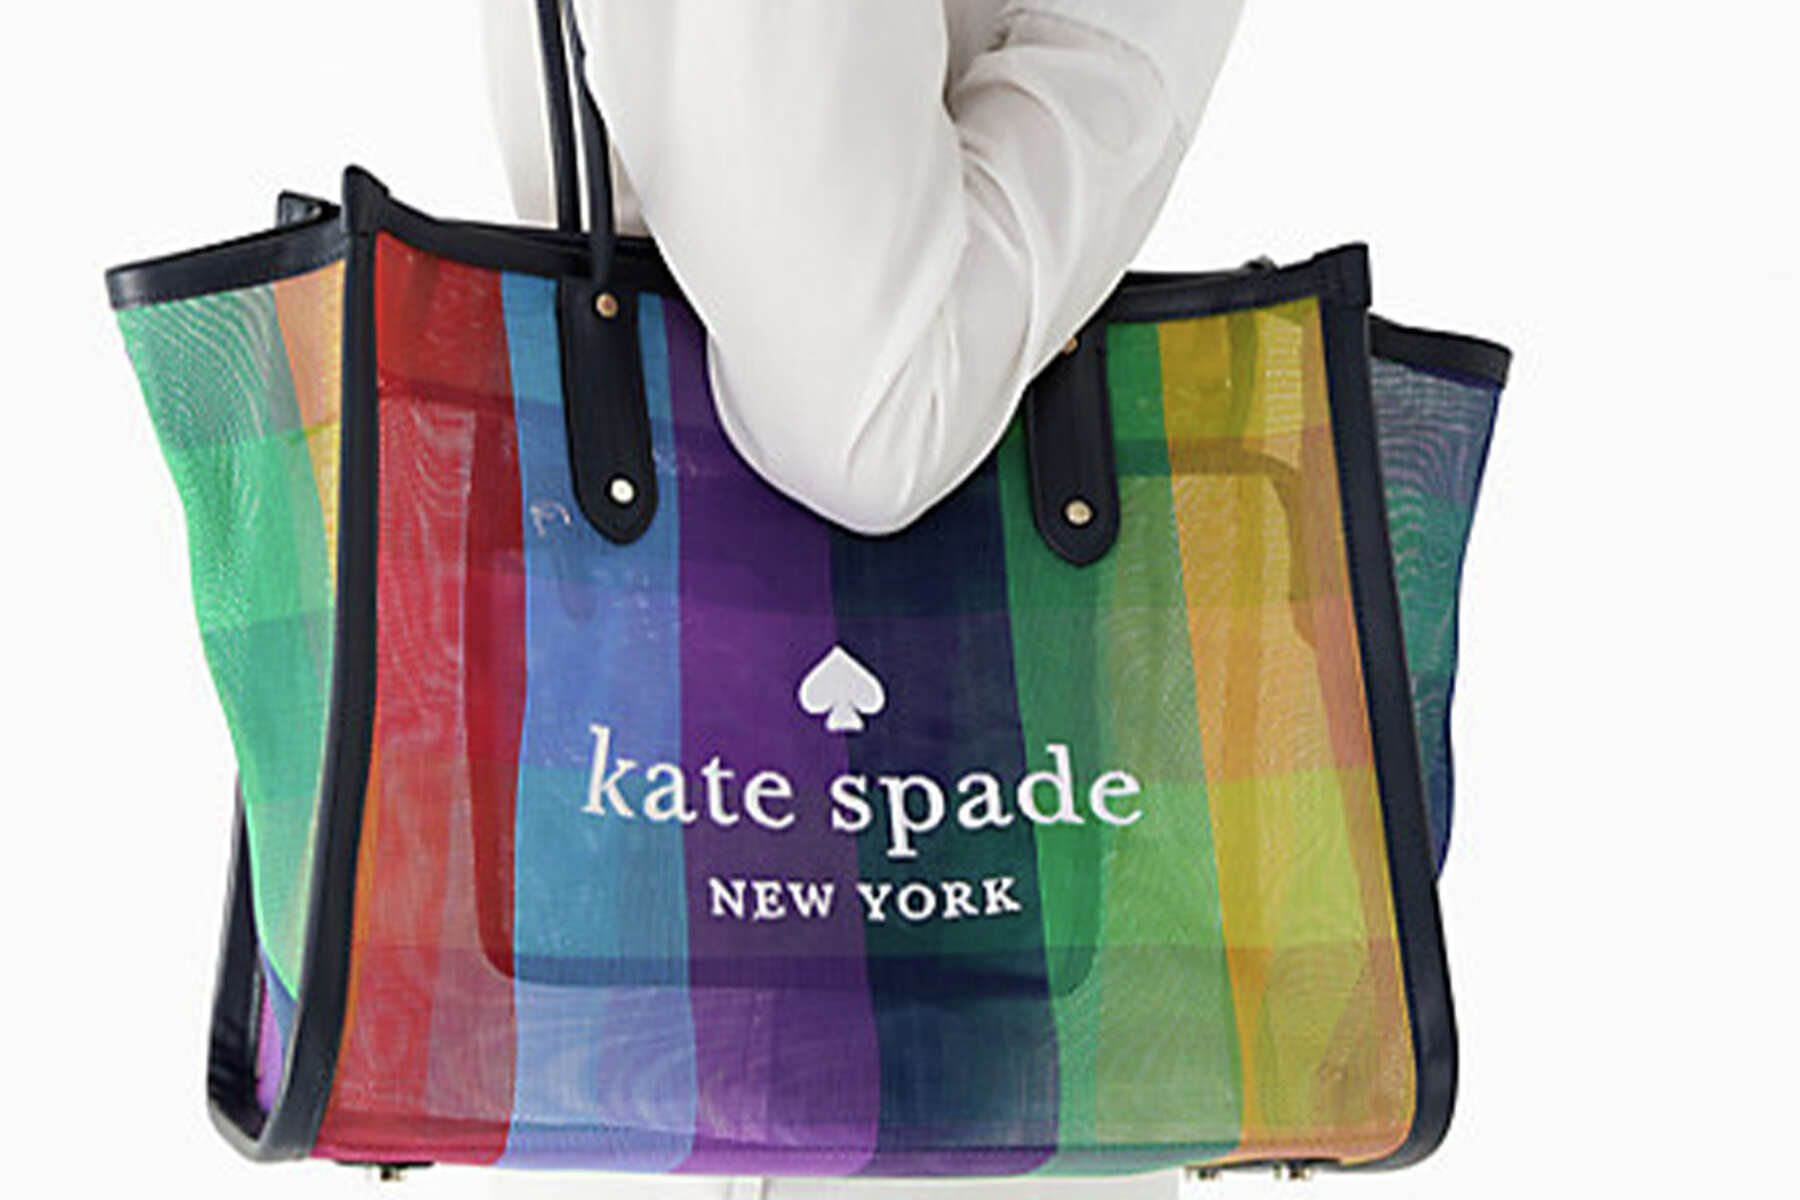 Shop the Kate Spade New York Surprise Sale 2020